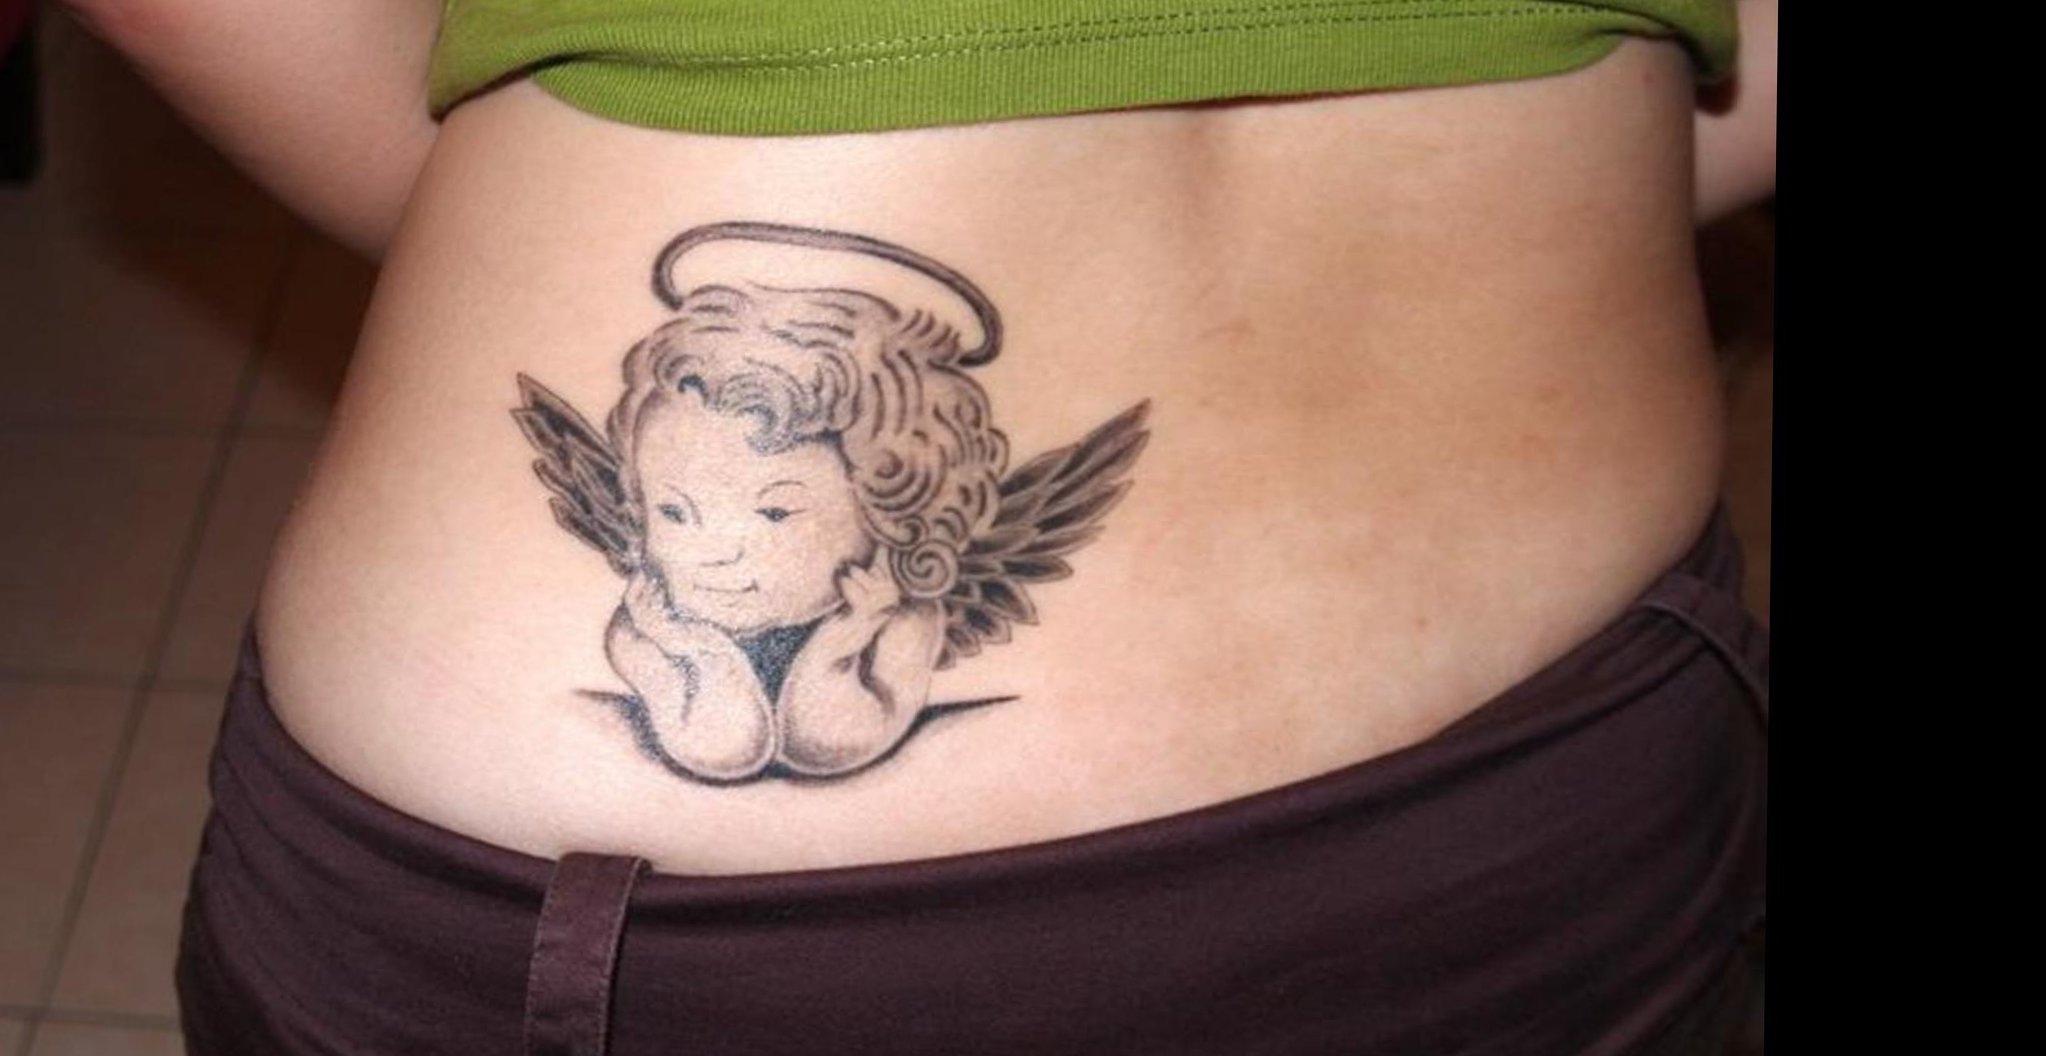 Engel tattoo motive